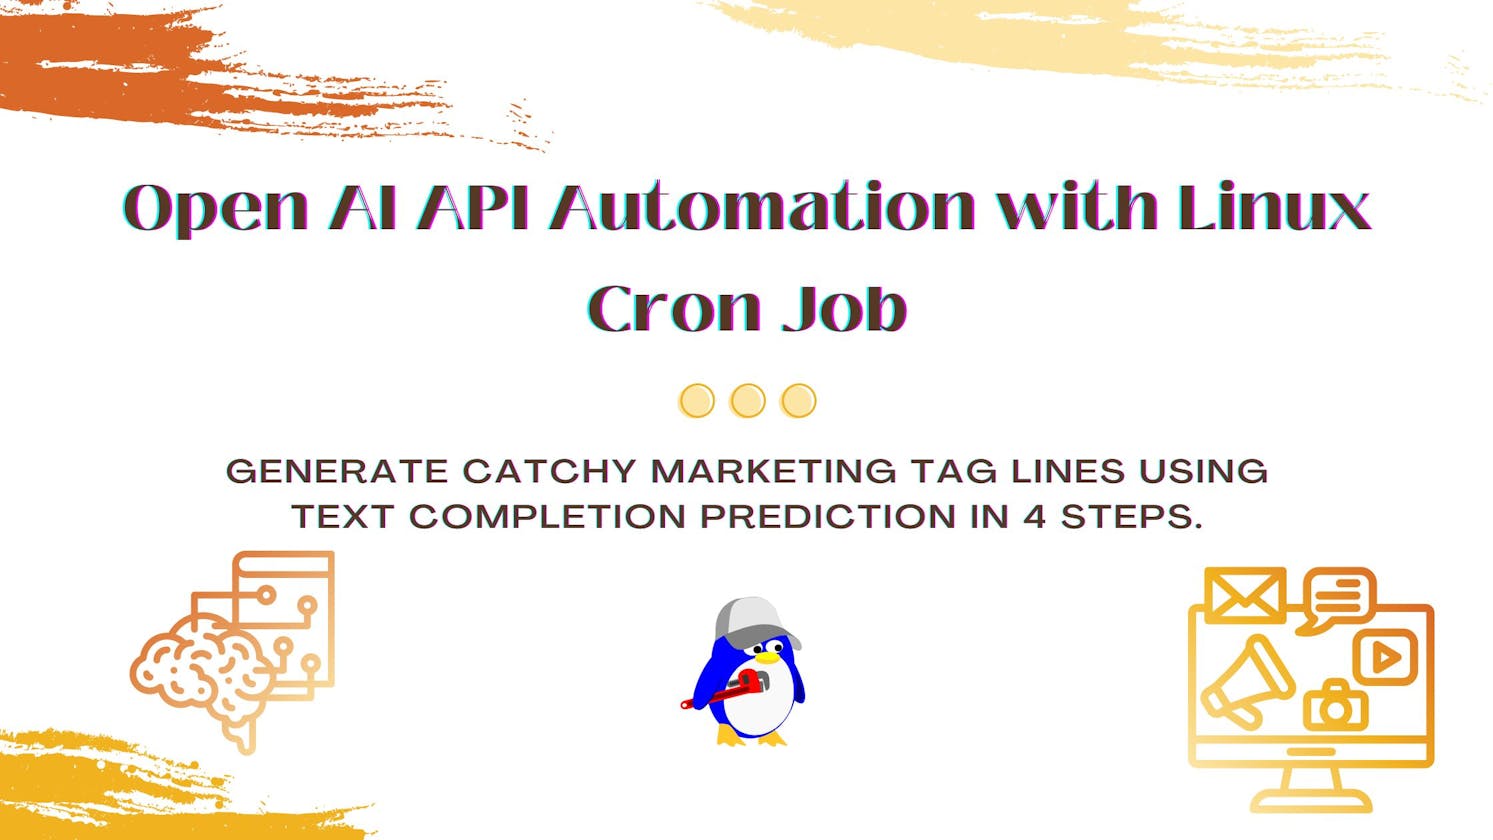 Open AI API Automation with Linux Cron Job